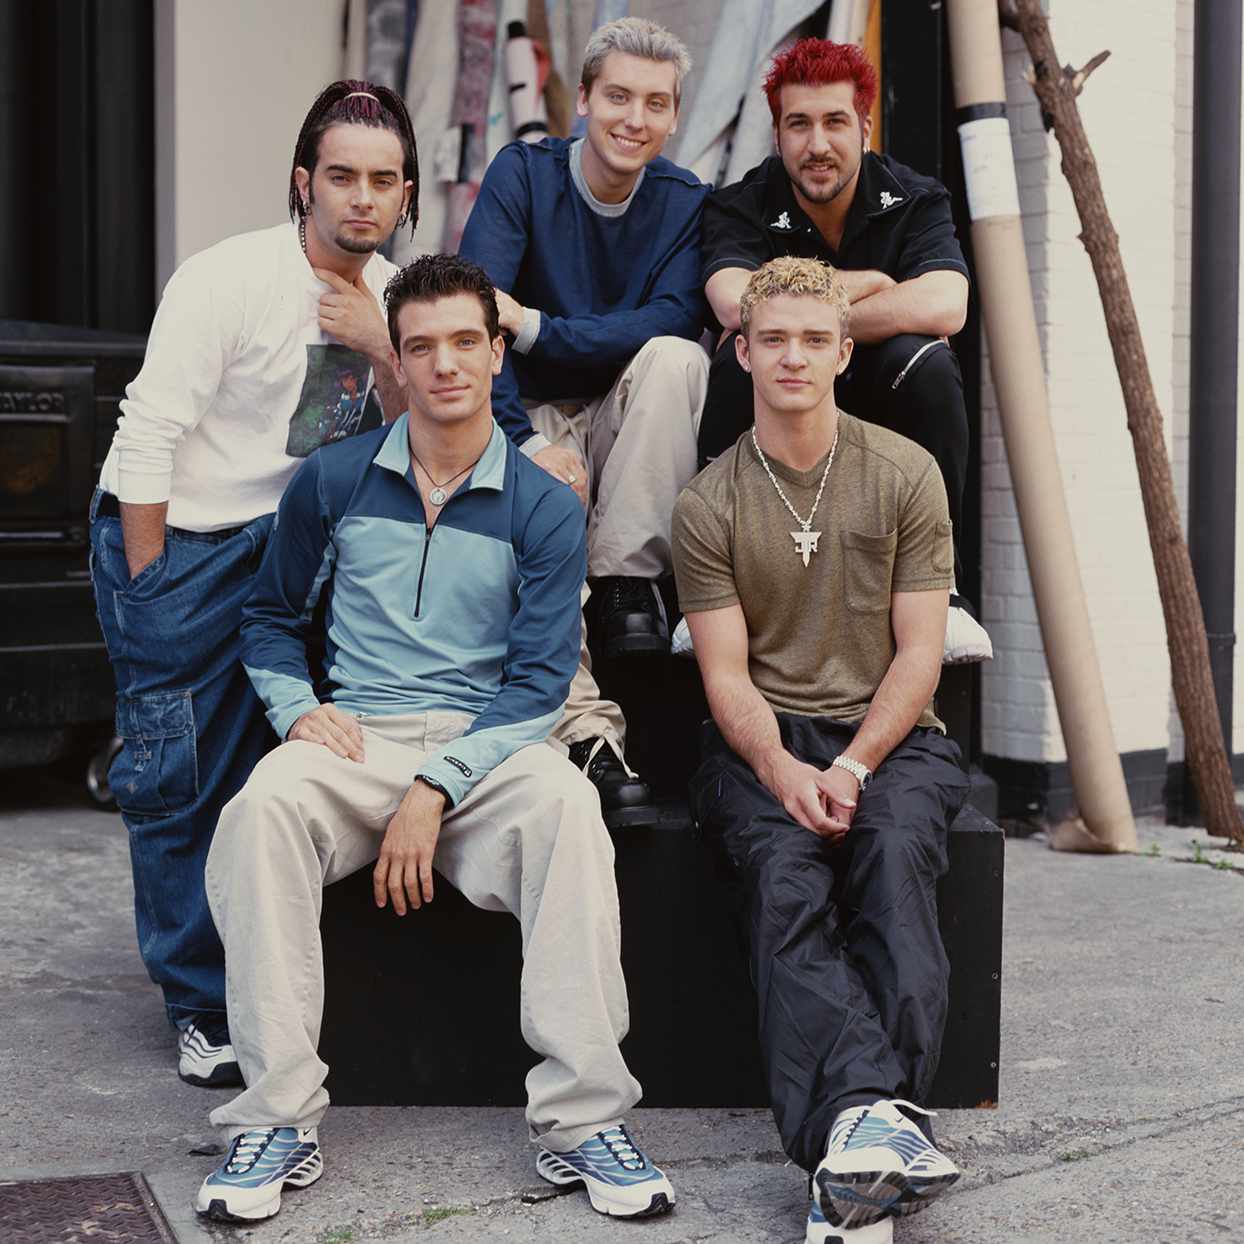 American boy band 'N Sync, circa 2001. Clockwise from back left, Chris Kirkpatrick, Lance Bass, Joey Fatone, Justin Timberlake and JC Chasez.